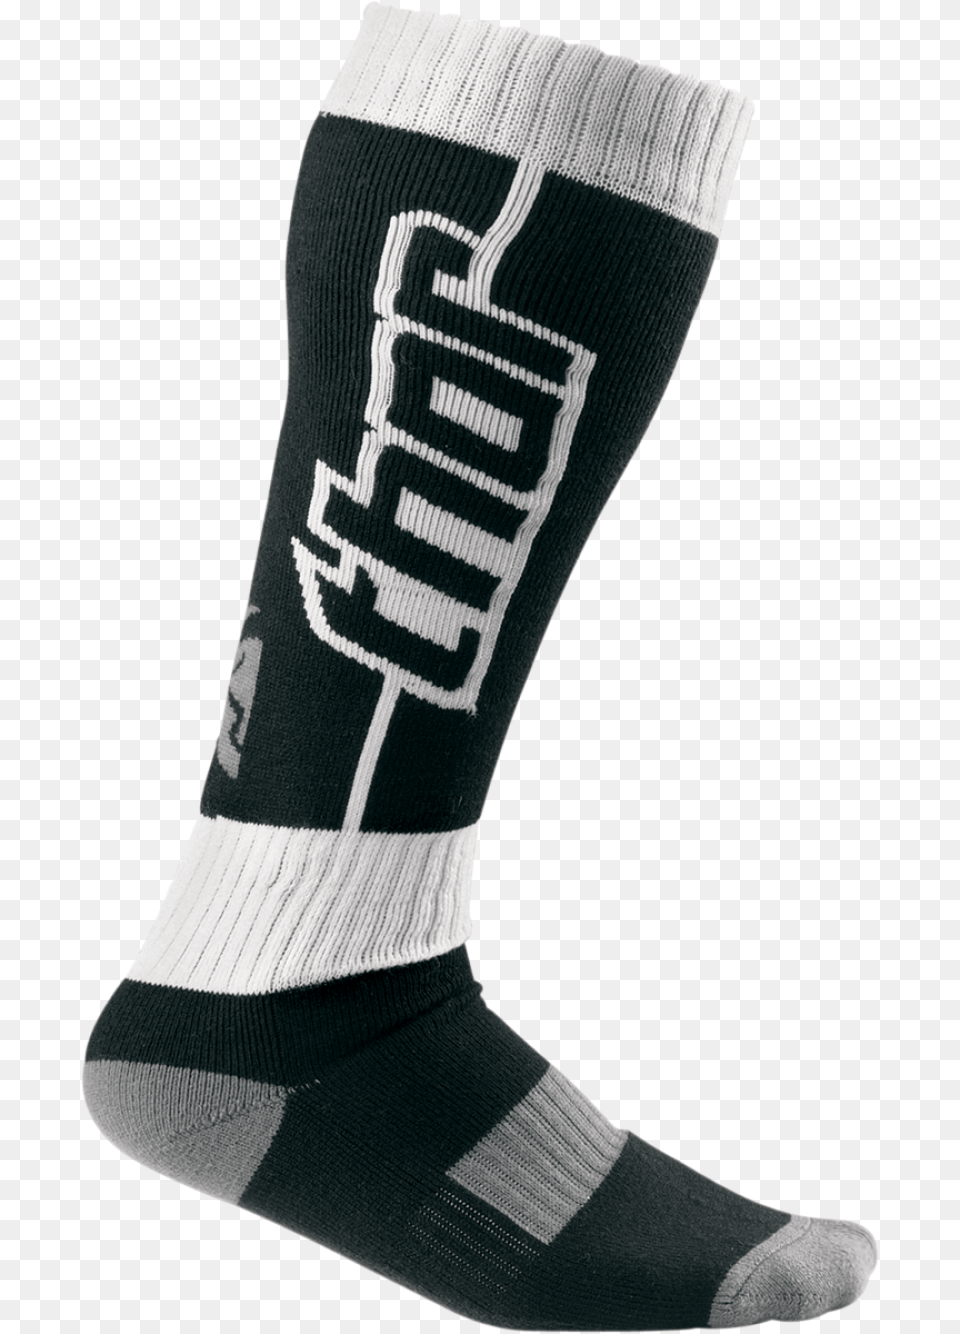 Thor Letter Socks Clothing, Hosiery, Sock Png Image